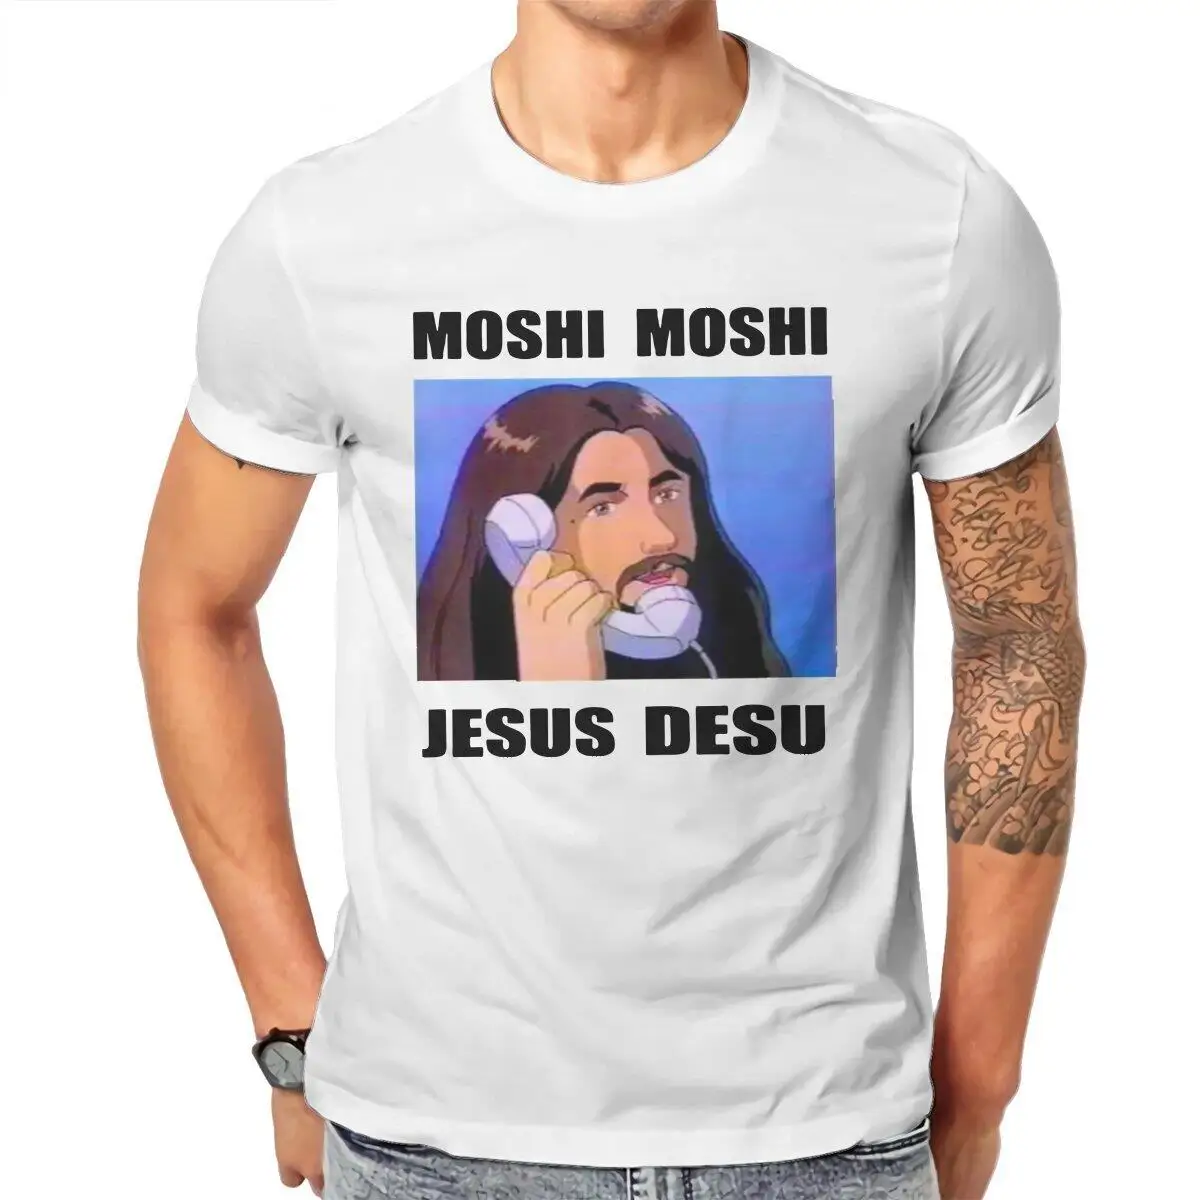 Moshi Moshi Jesus Desu Funny Meme Men's T Shirt Christian Religion Tees Short Sleeve T-Shirts 100% Cotton Plus Size Clothing